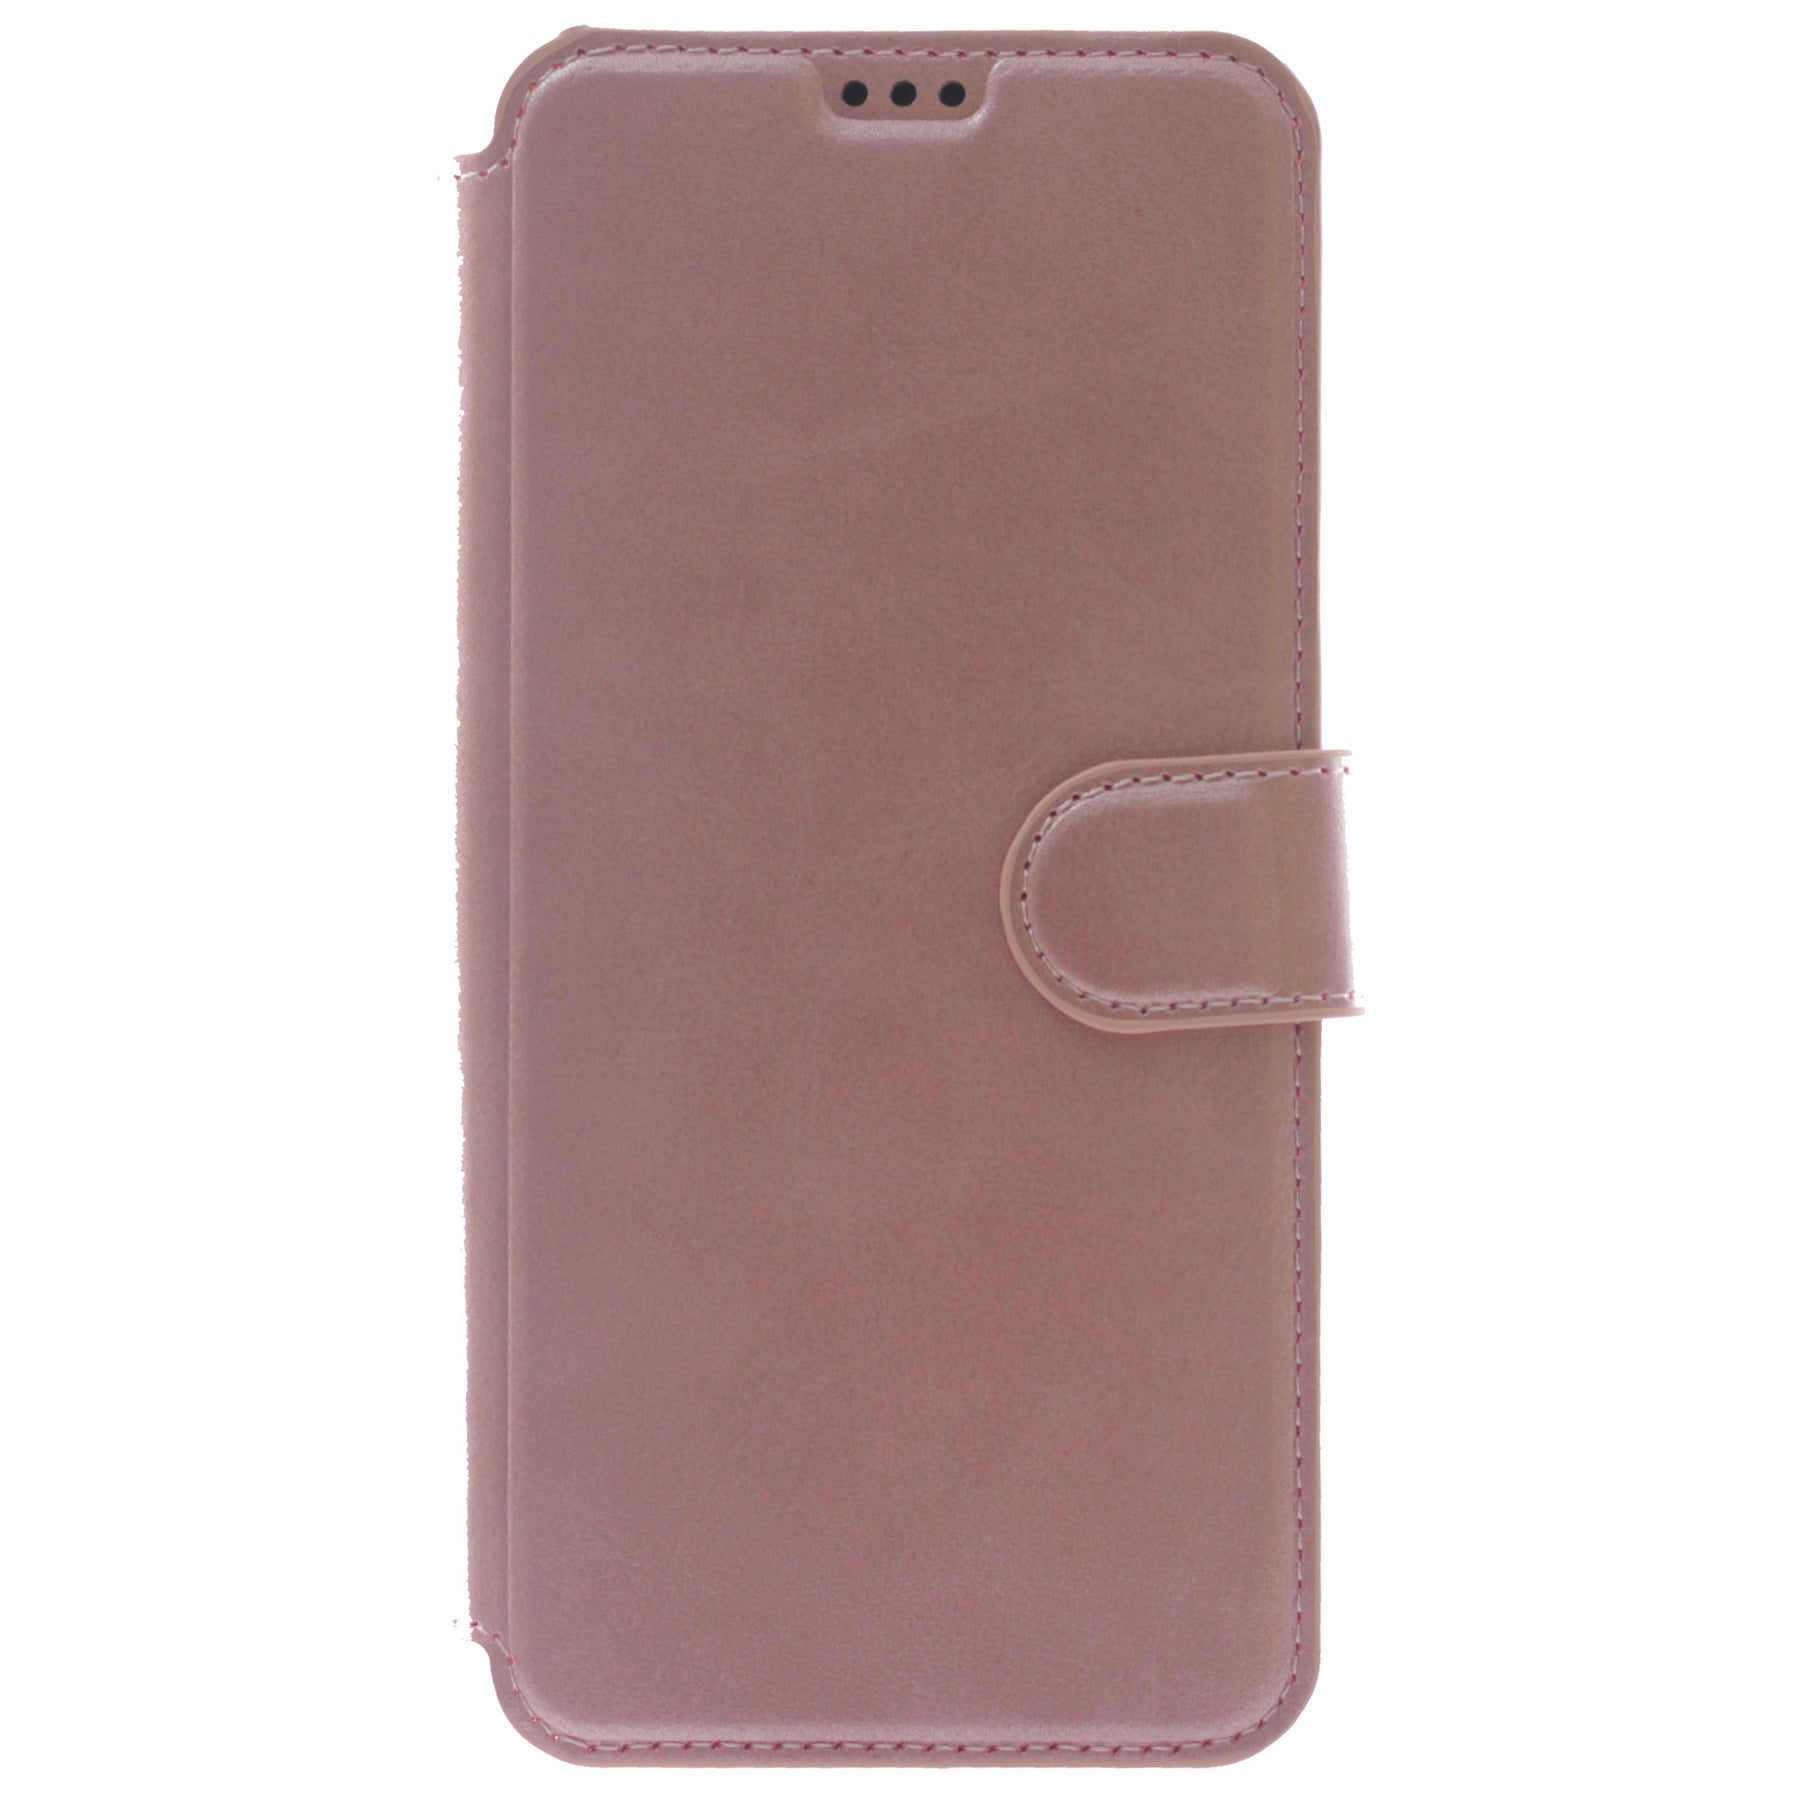 TCL, 20SE, Leather Wallet Case, Color Pink.